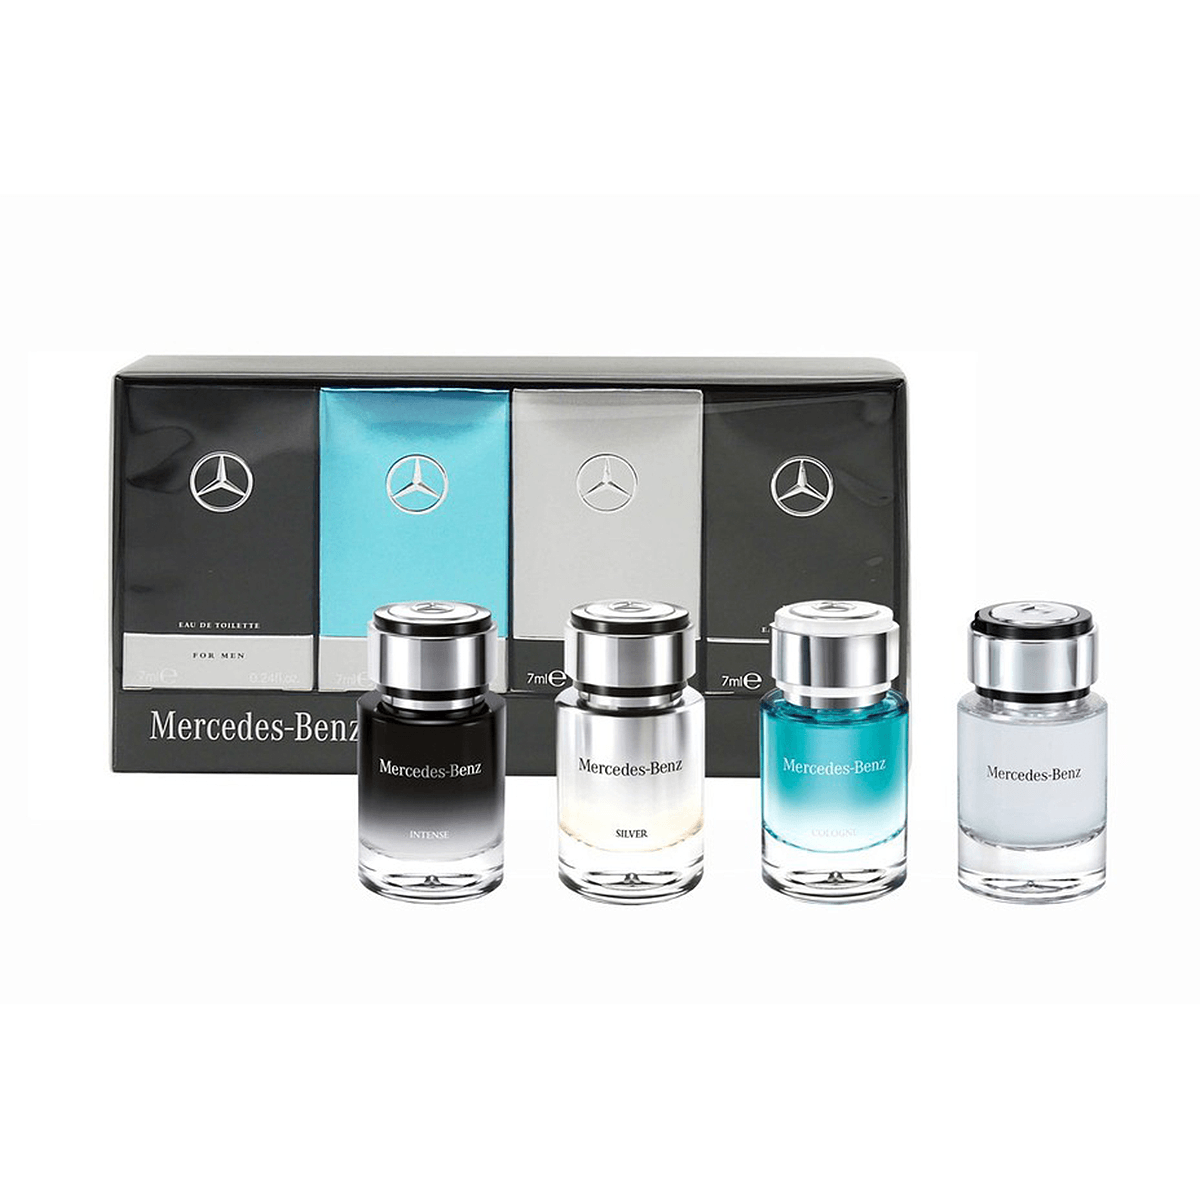 Mercedes-Benz Miniature Collection For Men - My Perfume Shop Australia